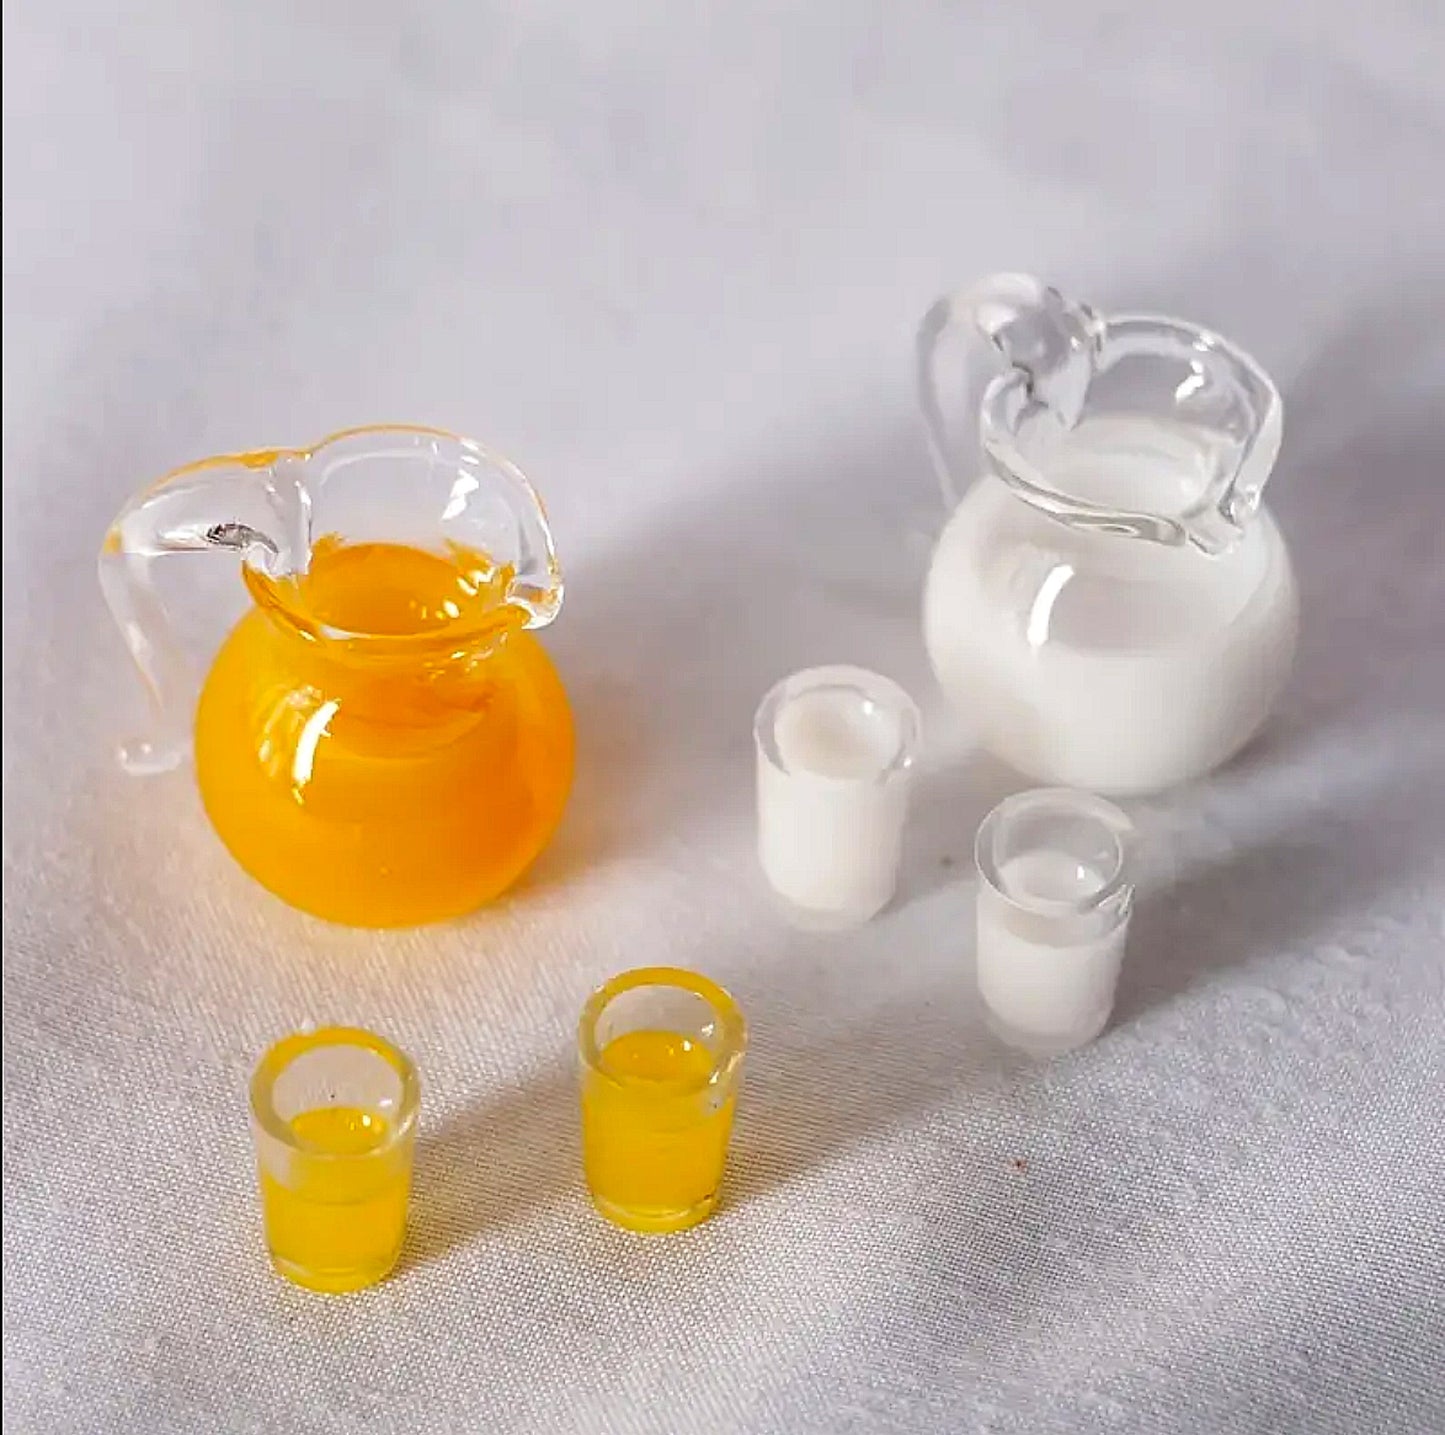 orange-juce-and-milk pitcher